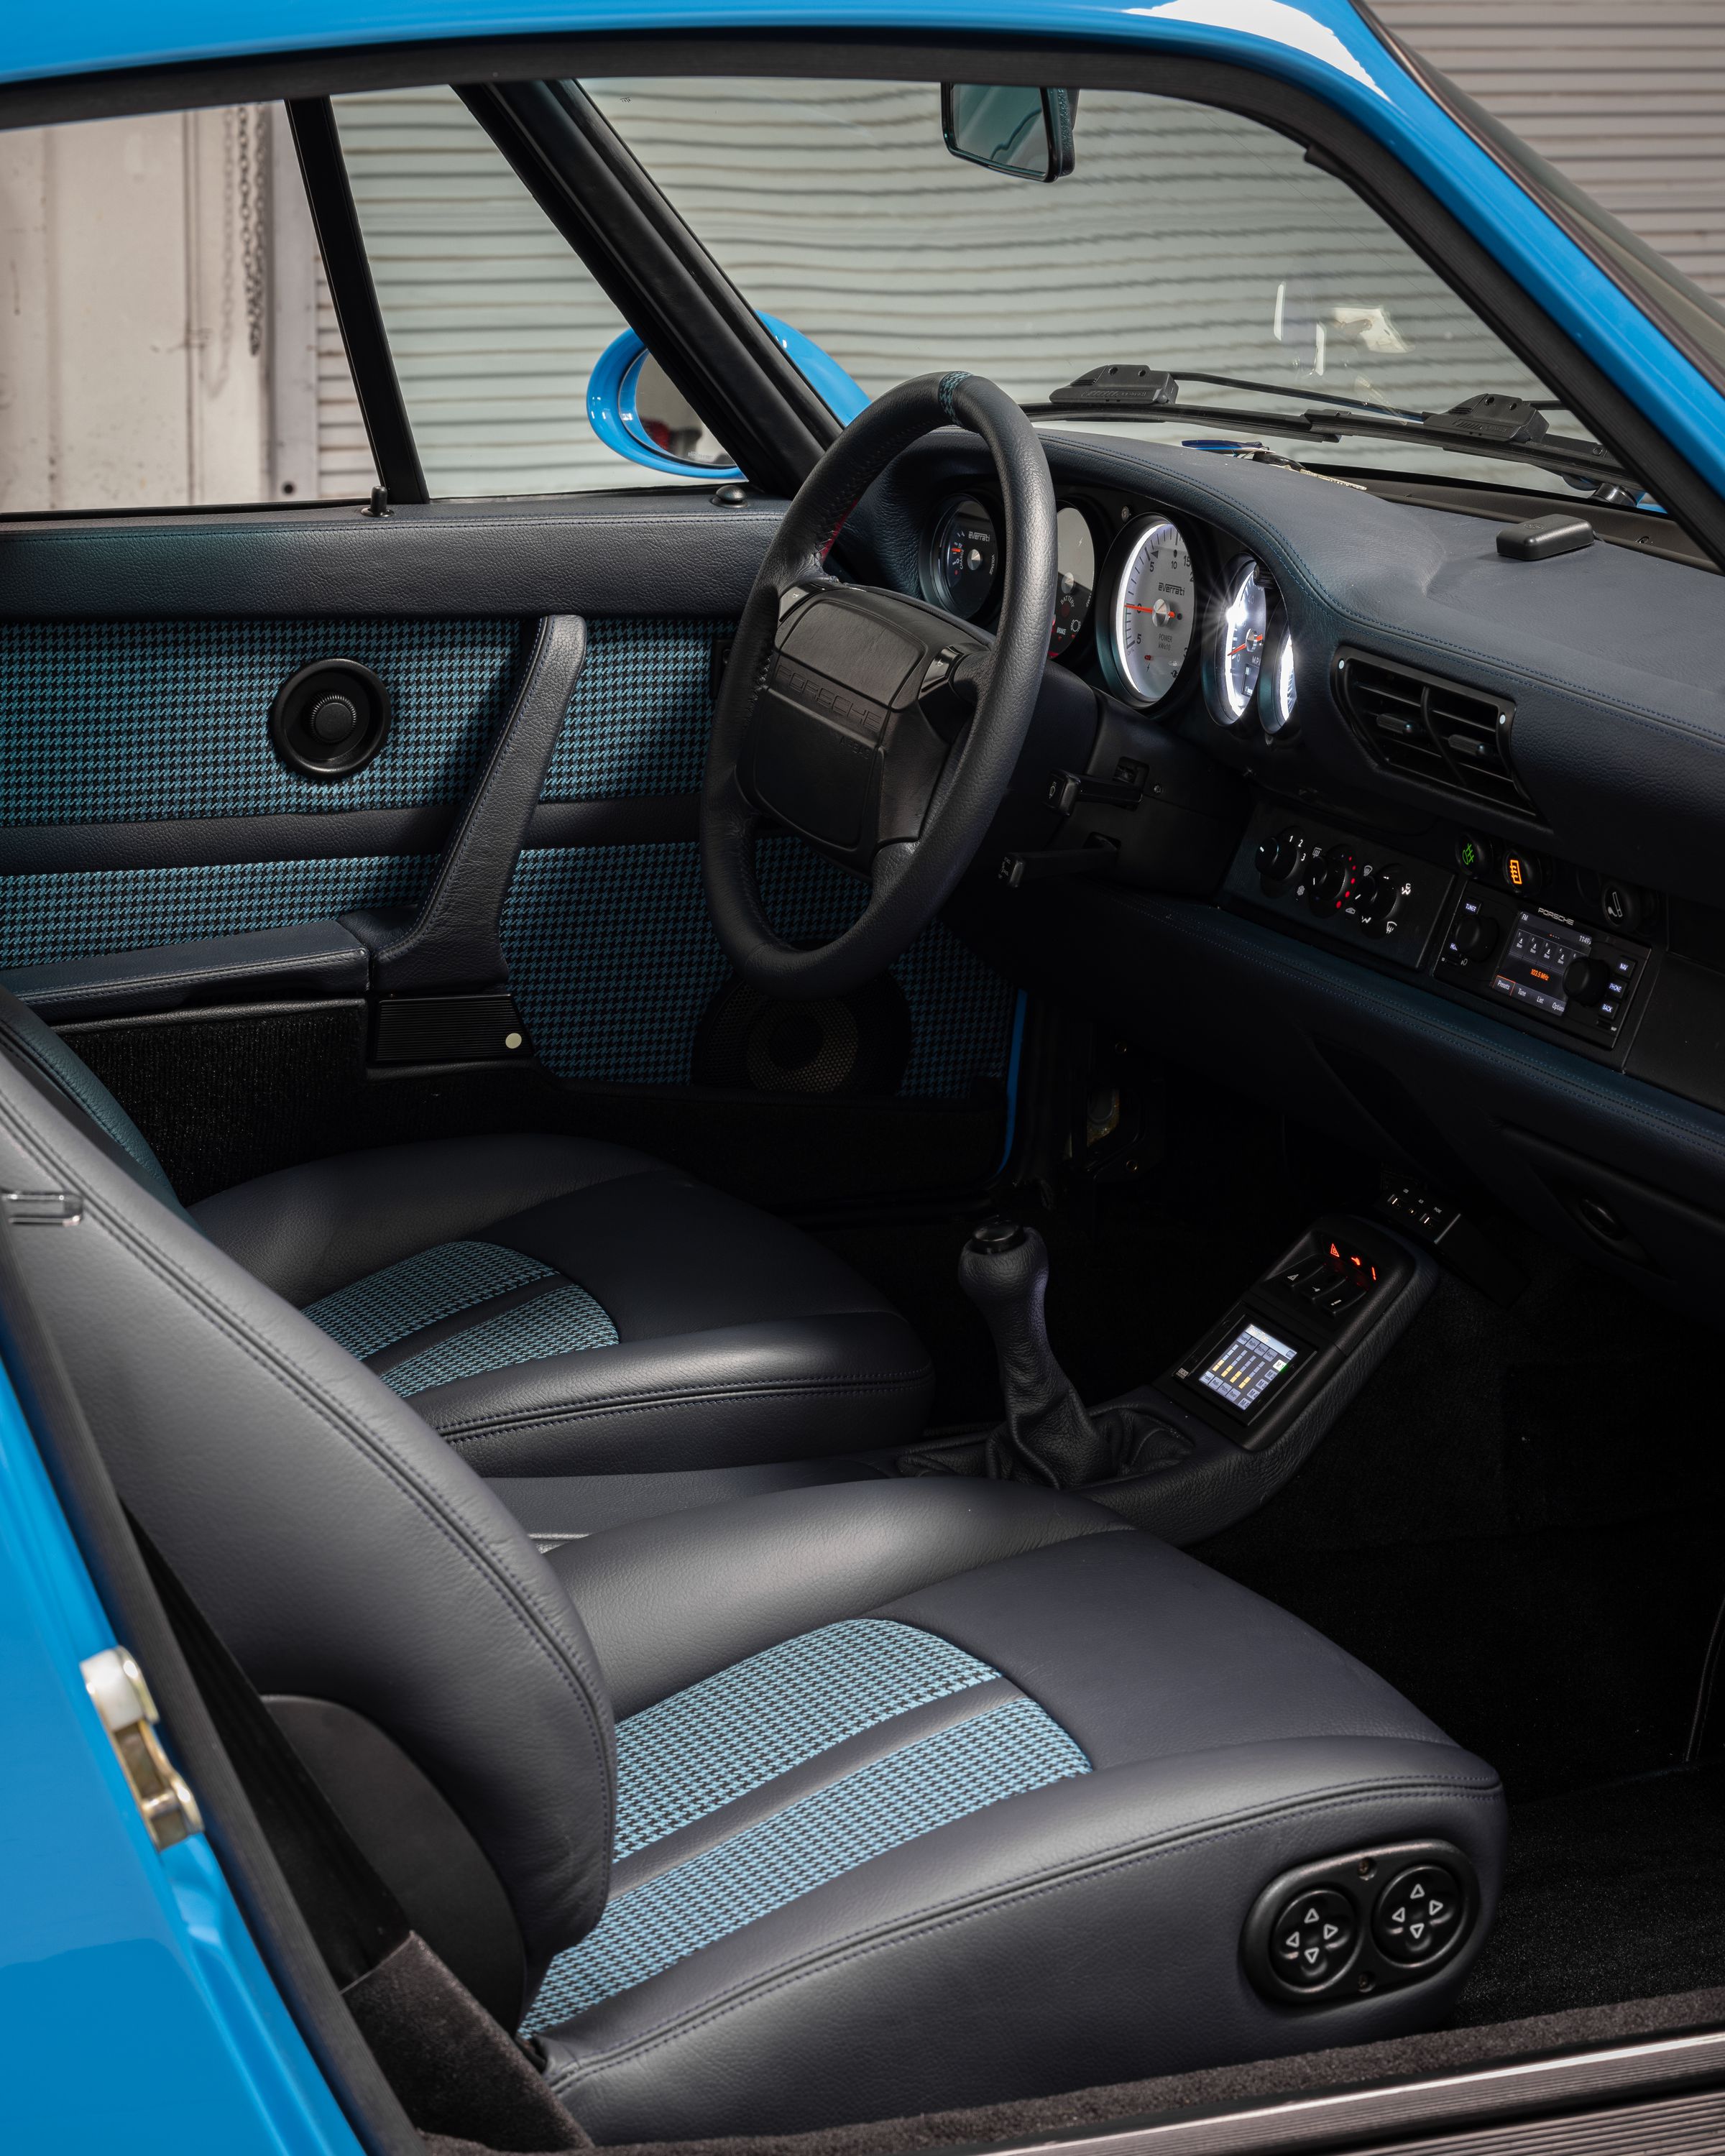 Matt Roger’s Everrati Porsche 911 has fresh leather upholstery, but mostly original console parts.